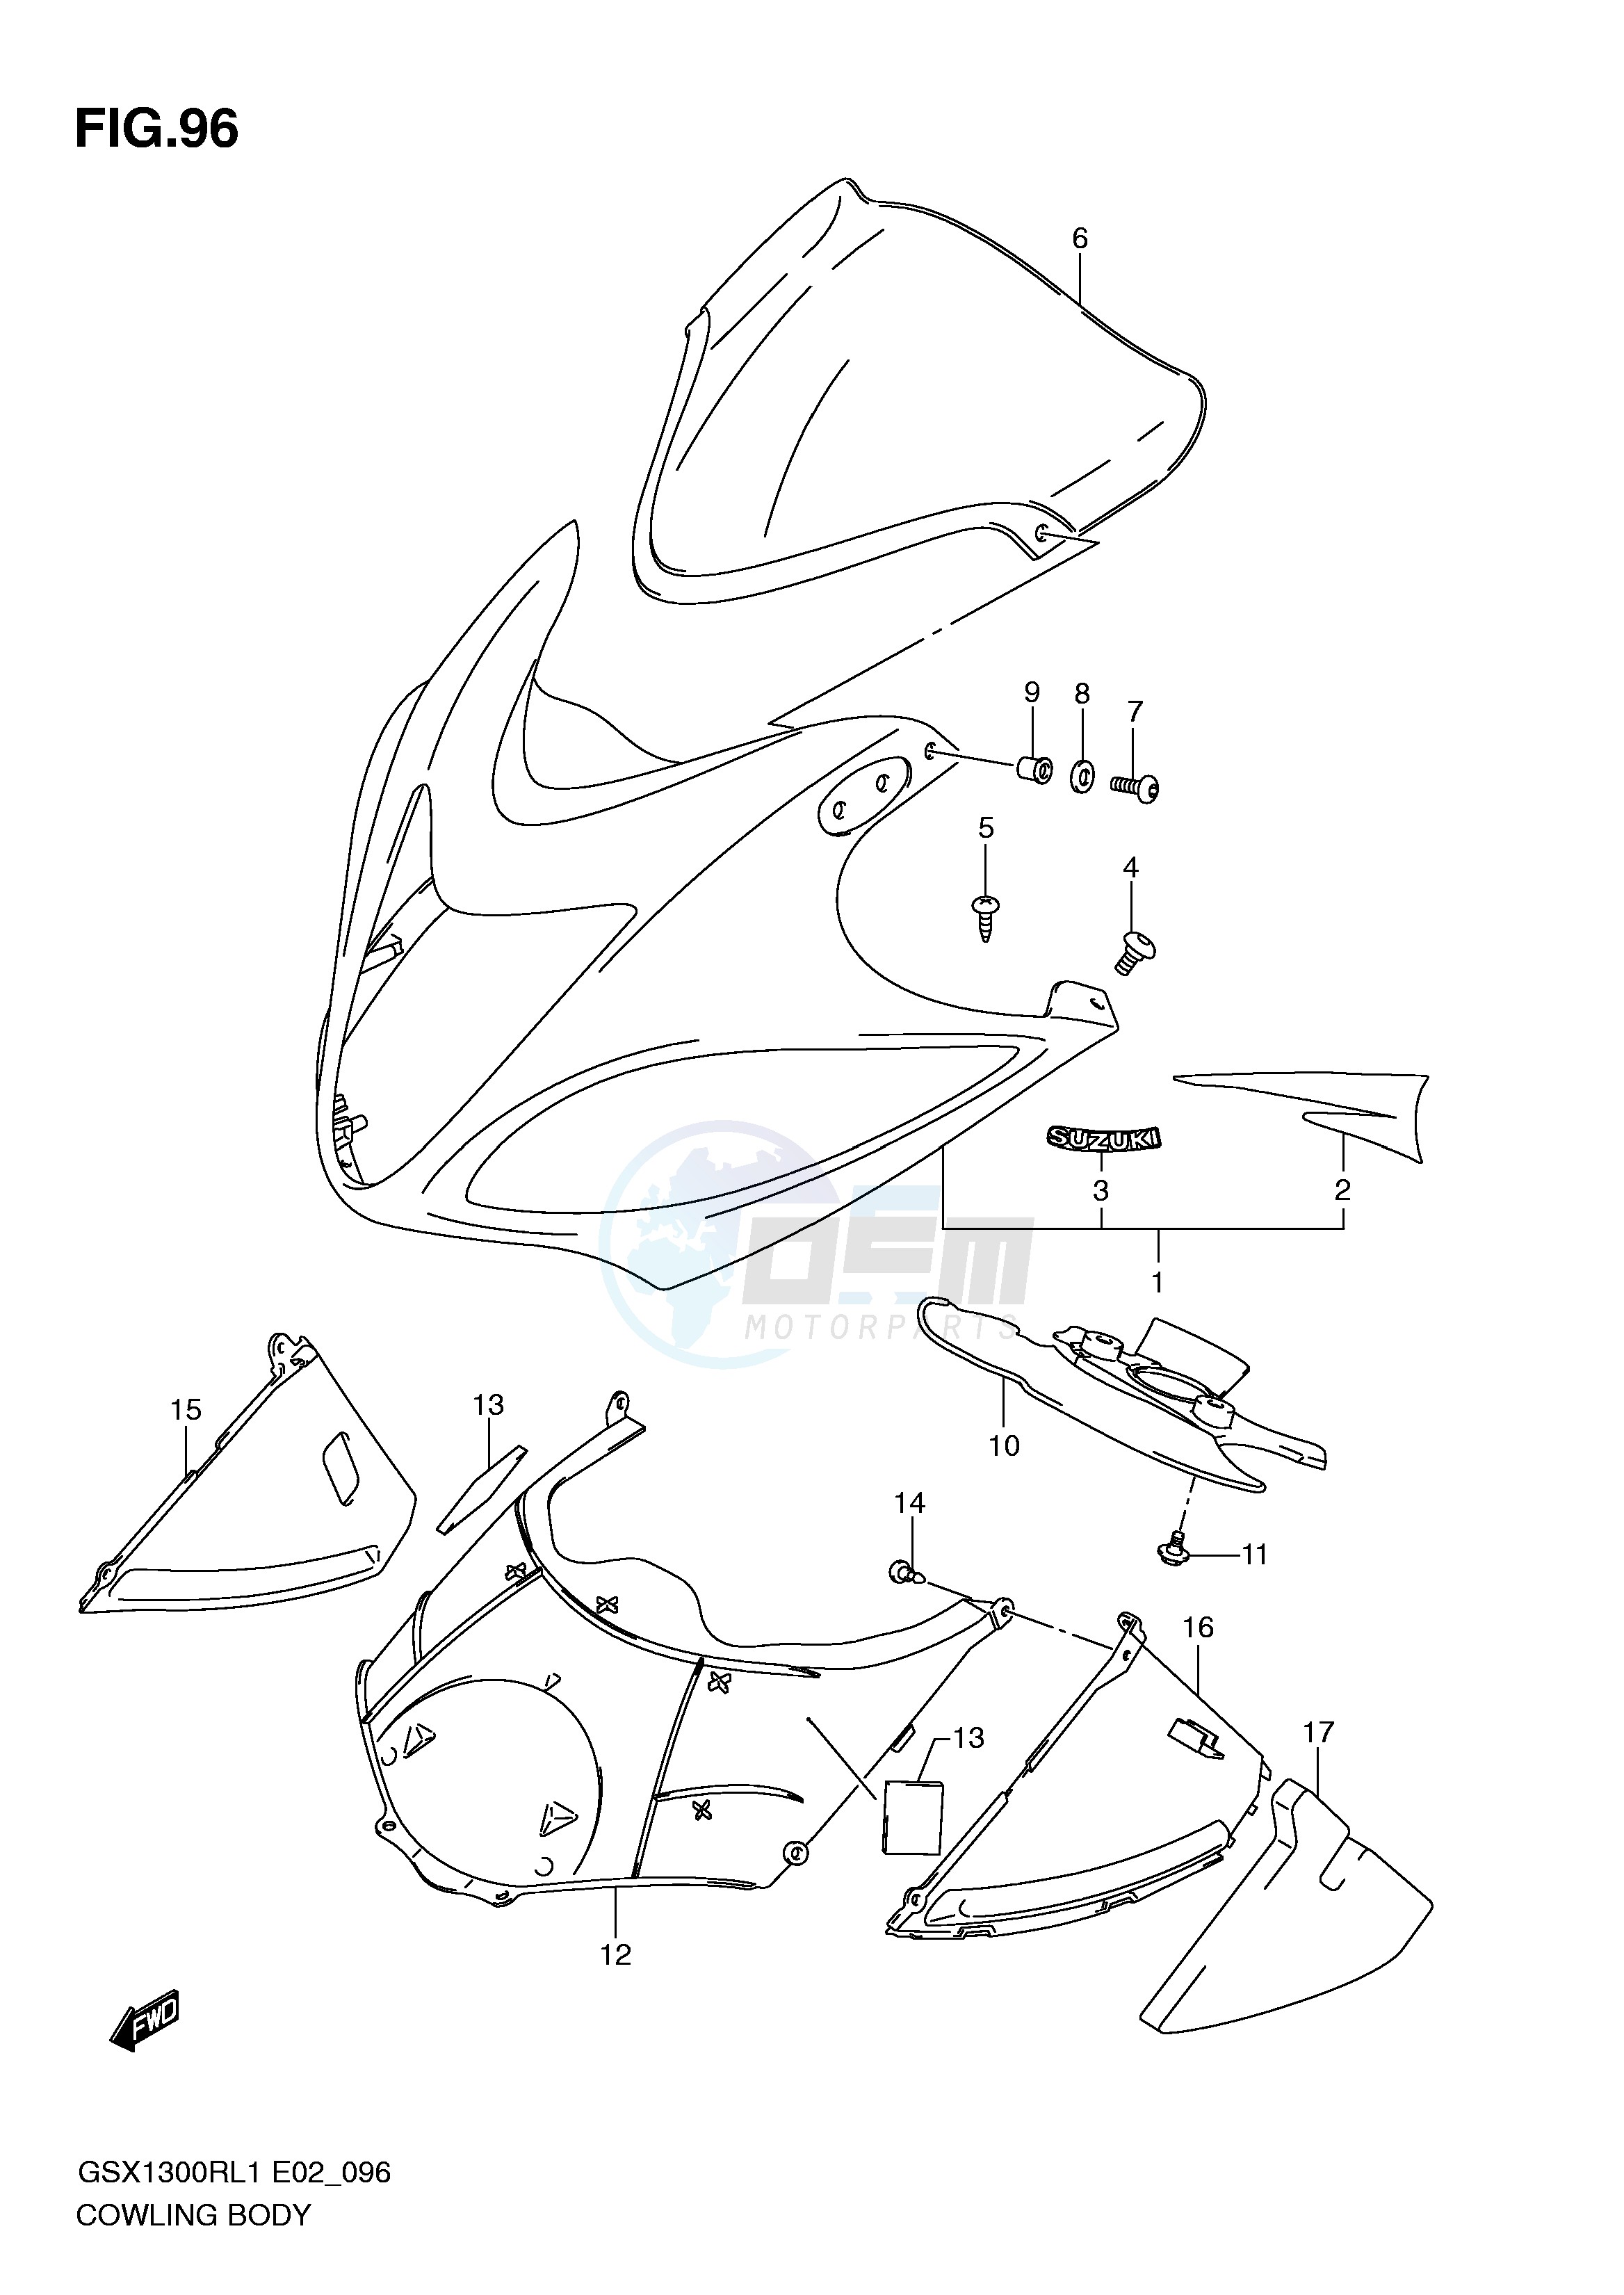 COWLING BODY (GSX1300RUFL1 E19) blueprint